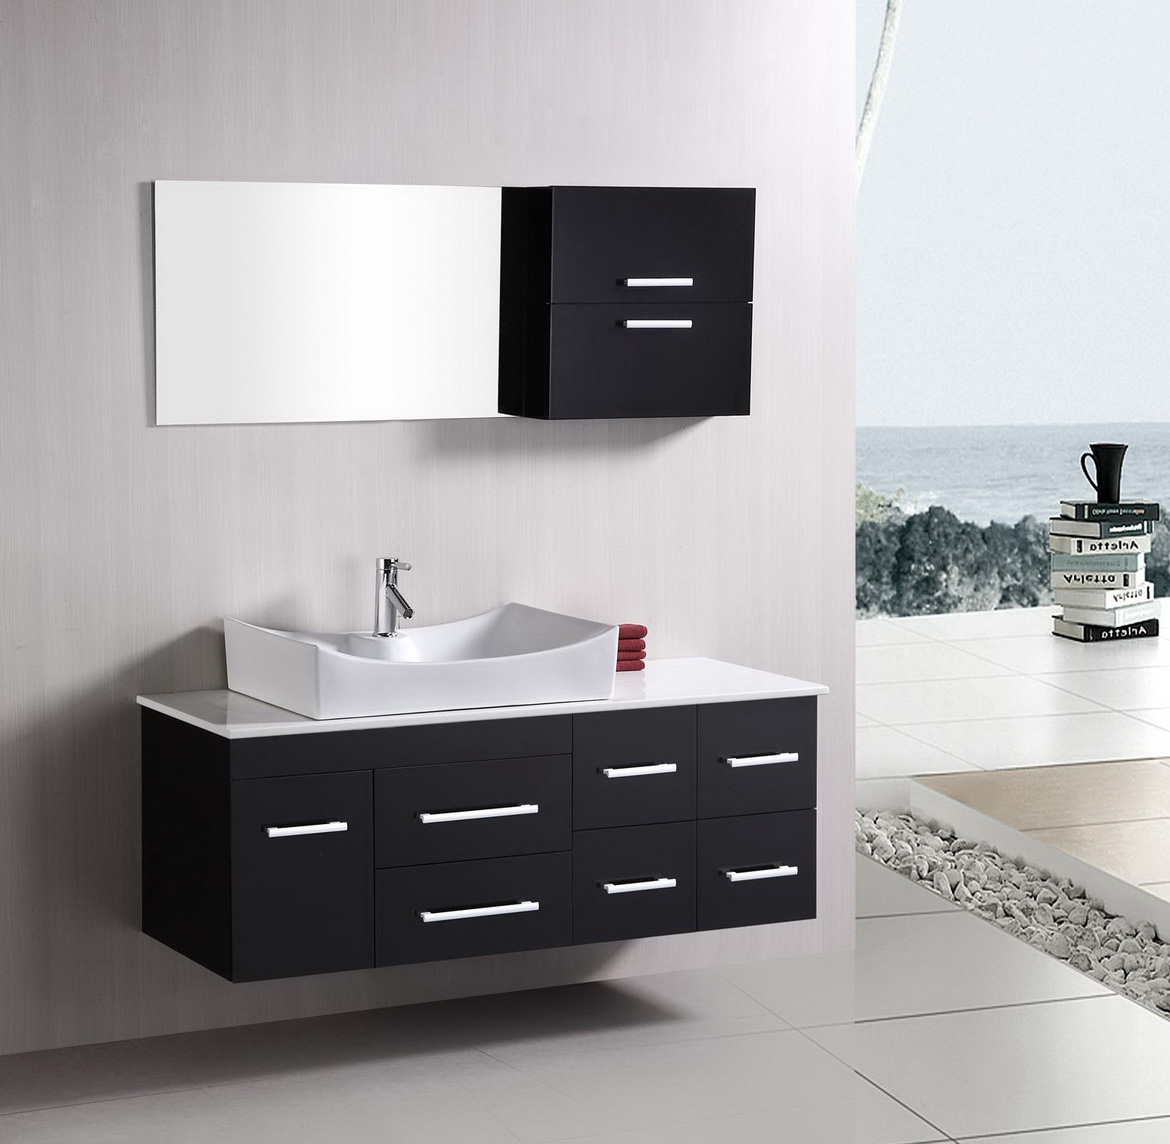 Small-Contemporary-Bathroom-Vanities-Design.